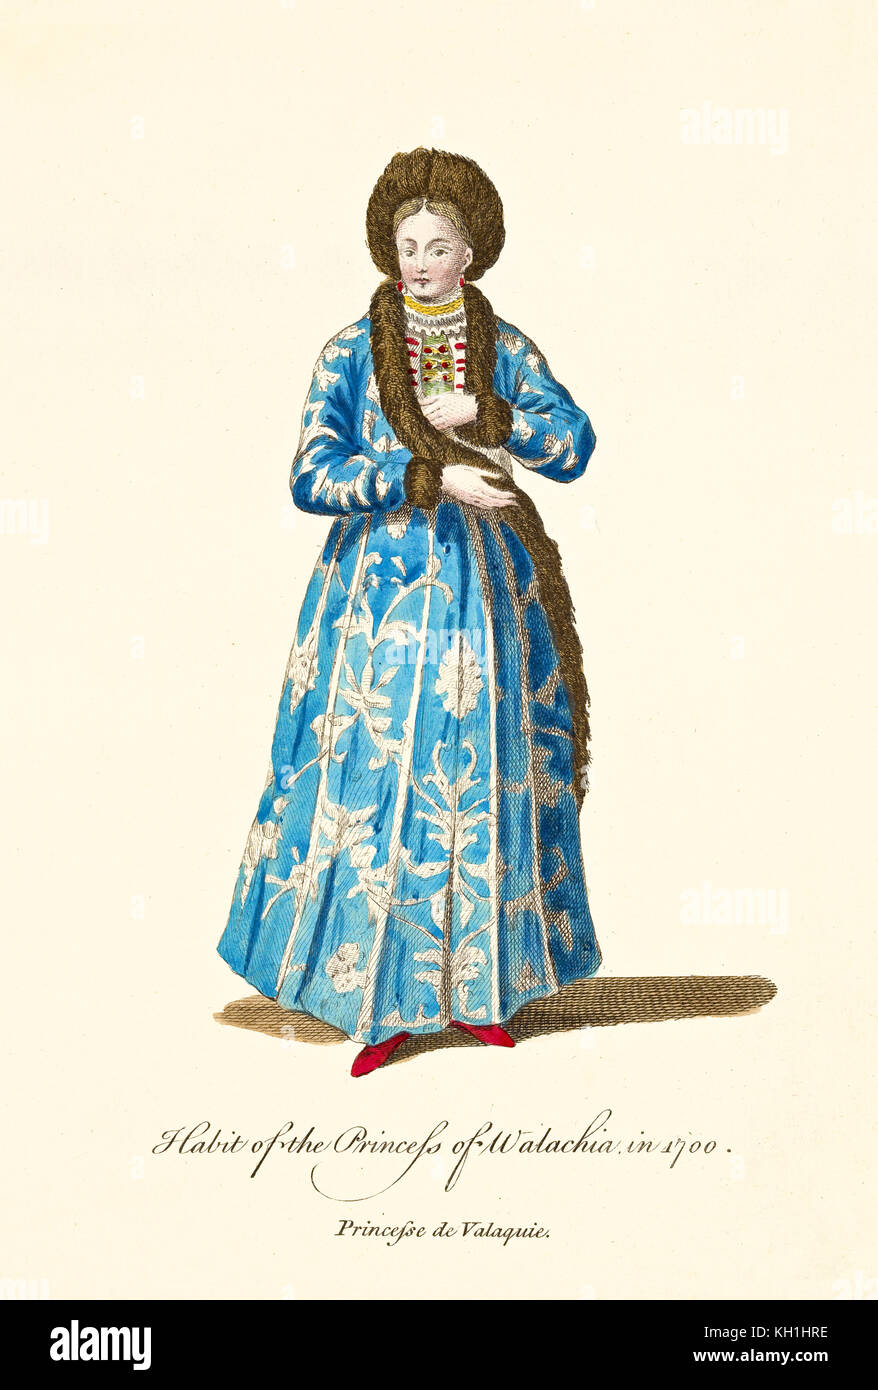 Princess of Wallachia in traditional long blue dresses in 1700. Old illustration by J.M. Vien, publ. T. Jefferys, London, 1757-1772 Stock Photo